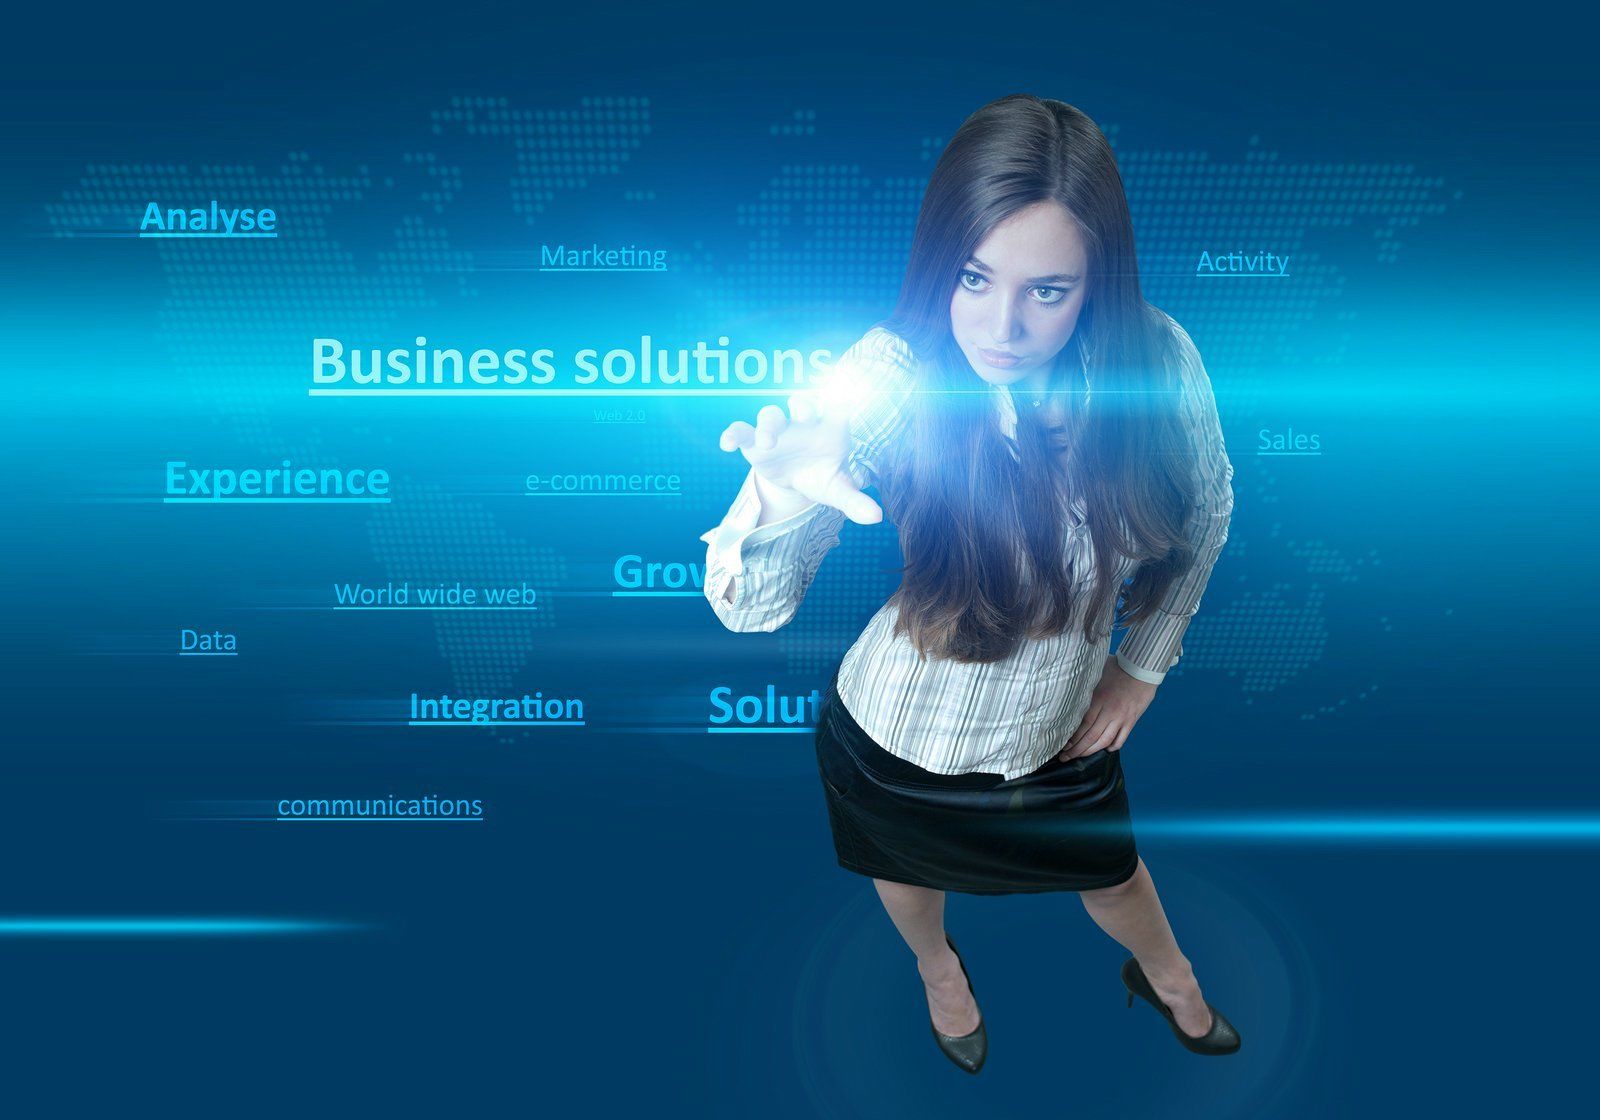 Net Social Video Marketing Expert Services For Smaller Businesses 1